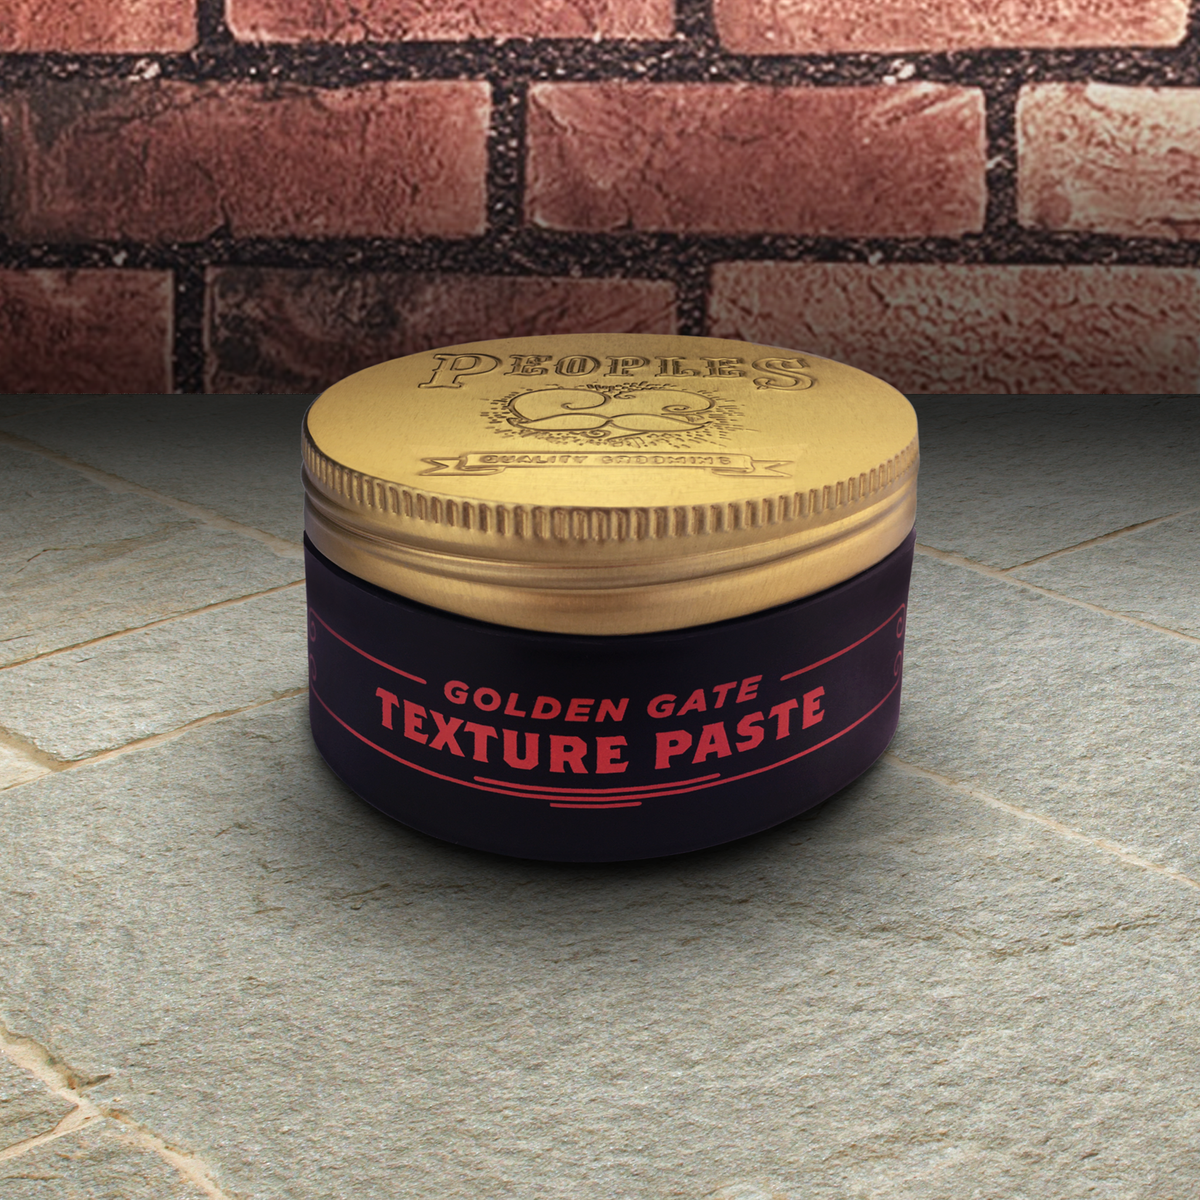 Golden Gate Texture Paste 3.4 oz – People's Barber